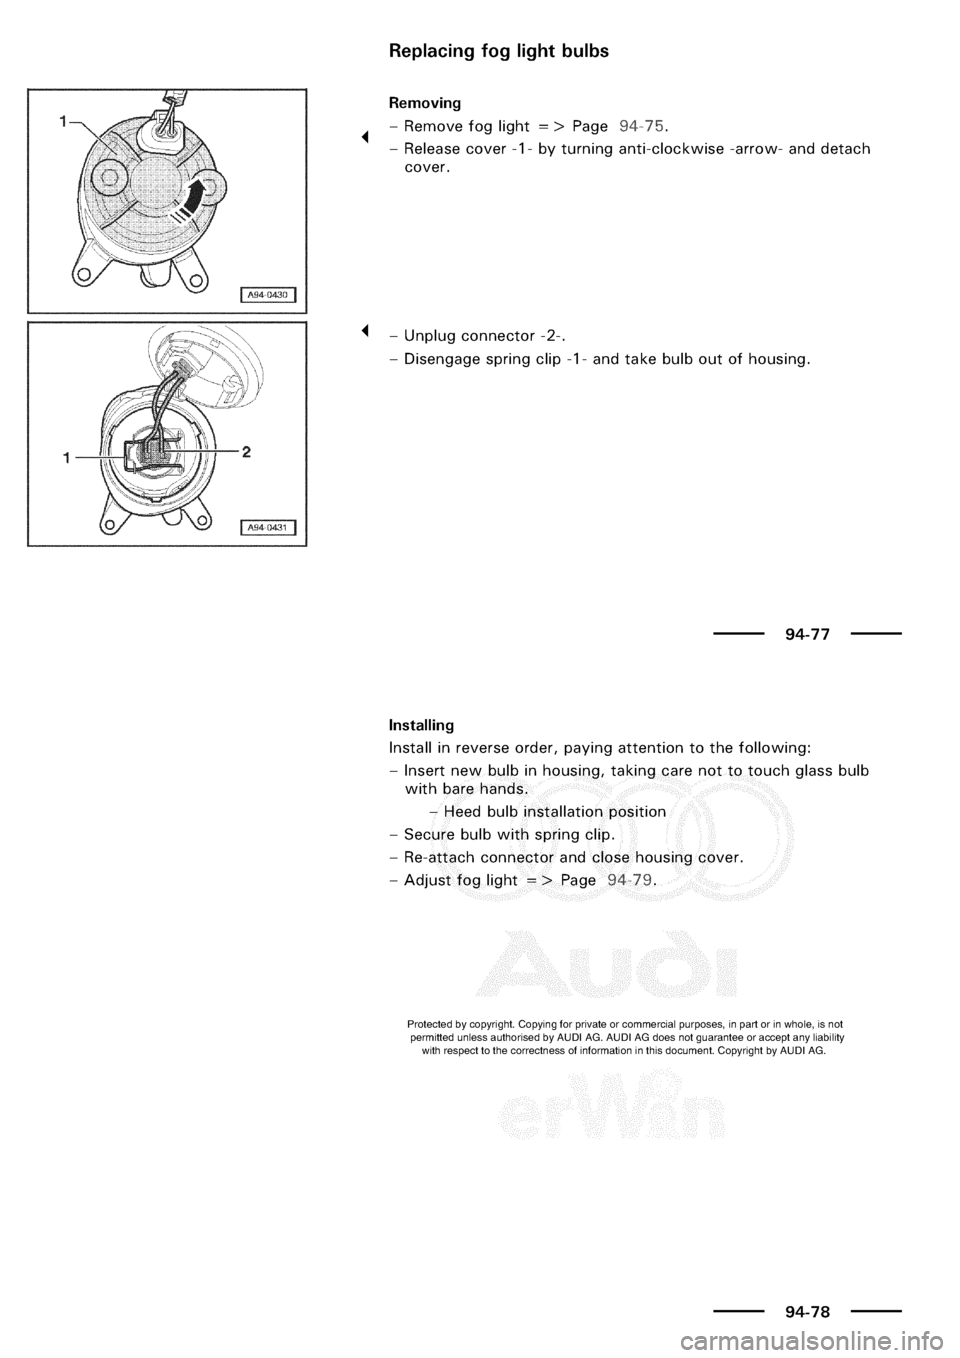 AUDI A3 1997 8L / 1.G Electrical System Workshop Manual 